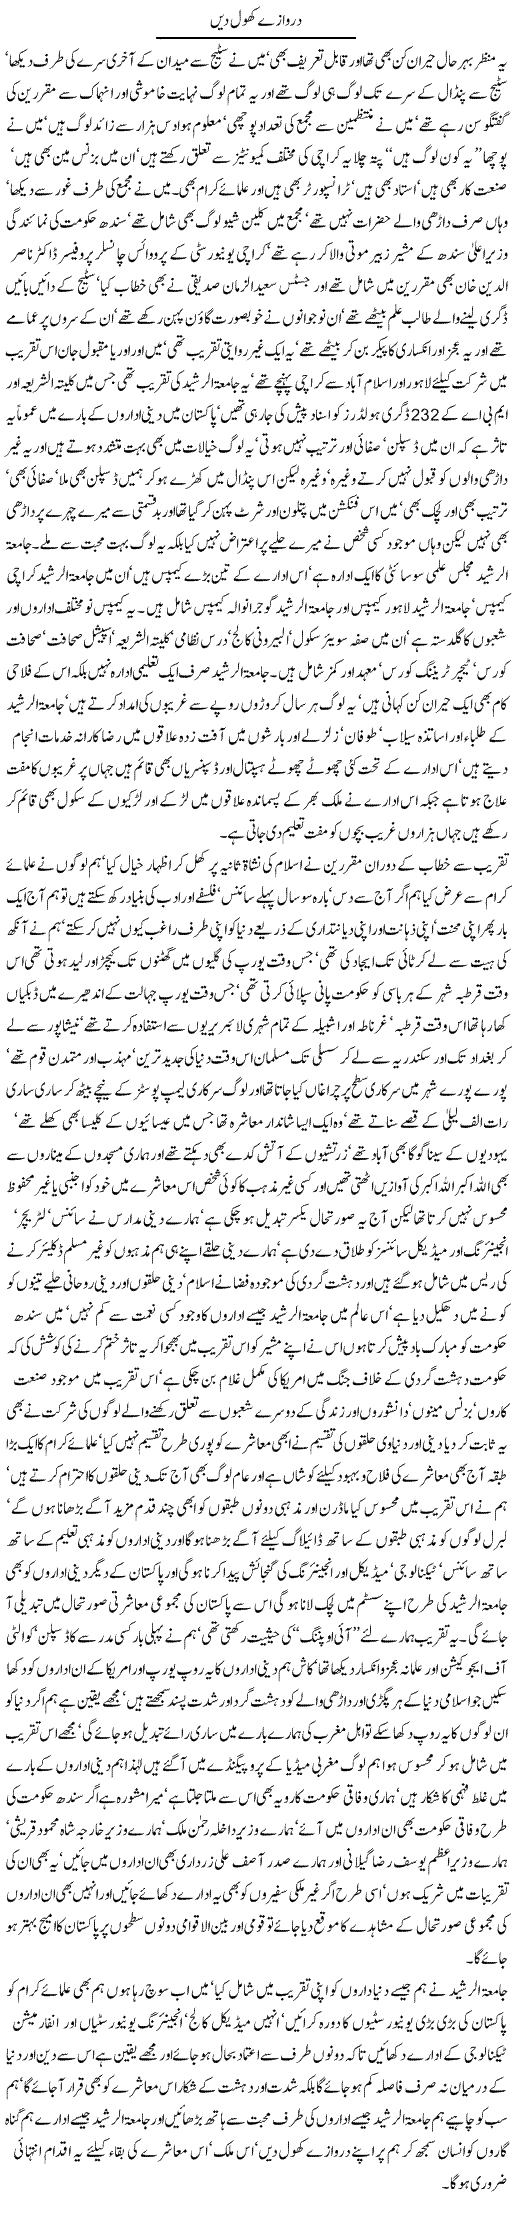 Darwaze Khol Den Express Column Javed Chaudhry 27 July 2010